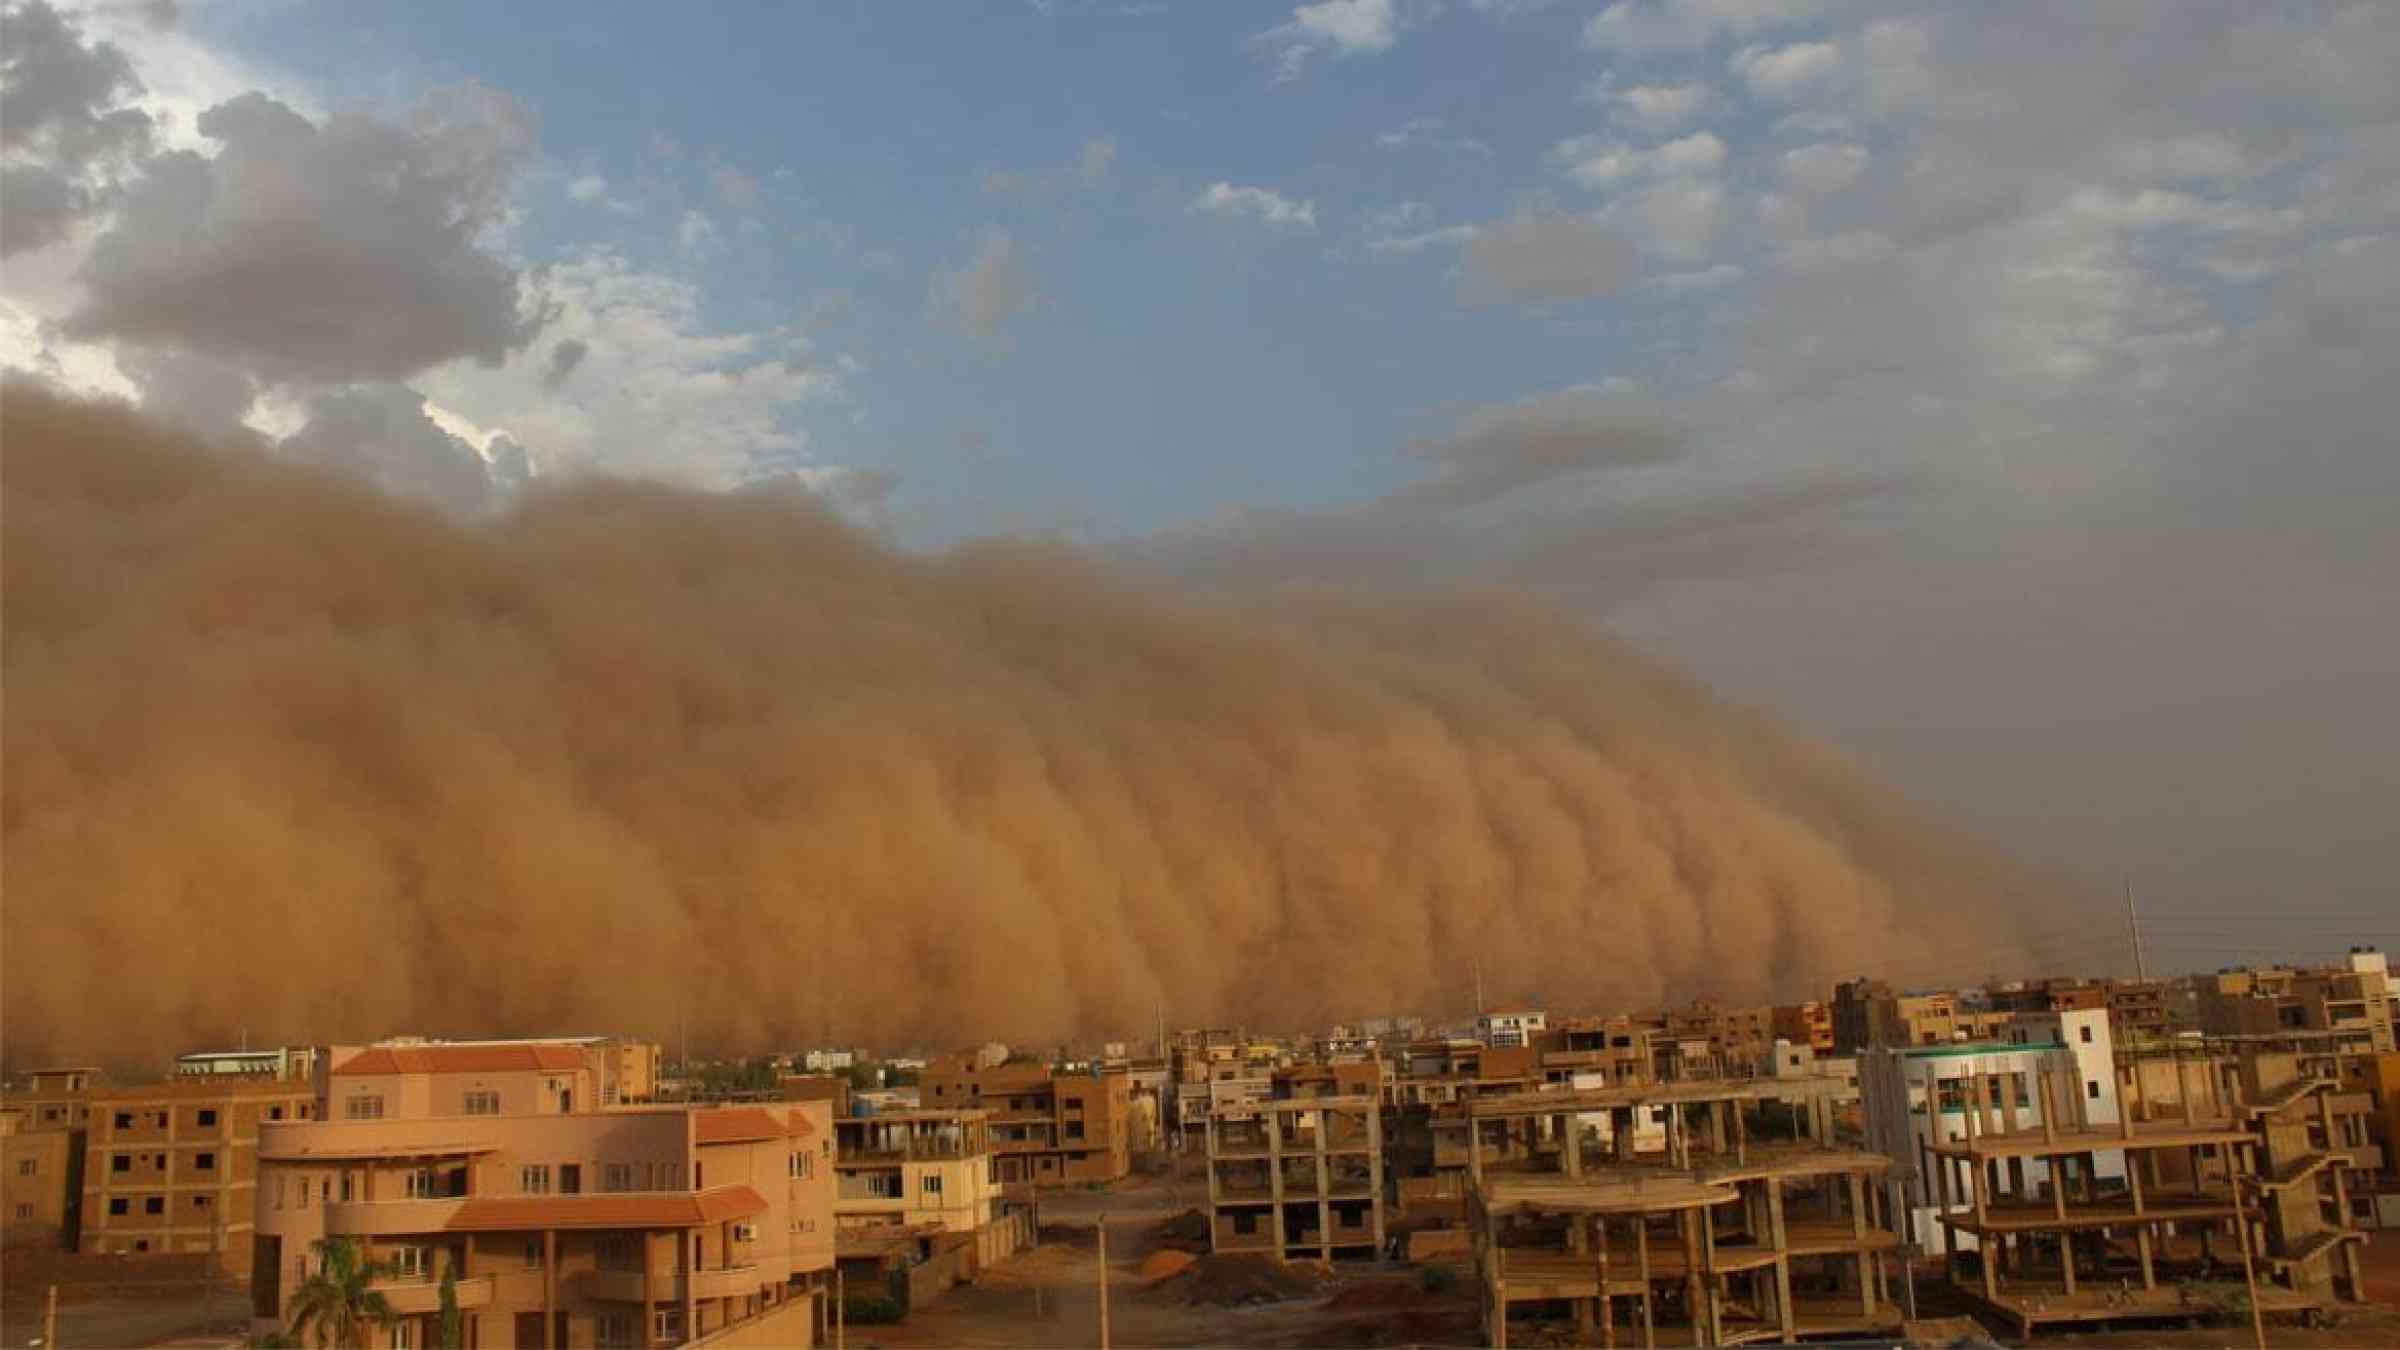 A sandstorm cloud approaches the city of Khartoum in Sudan